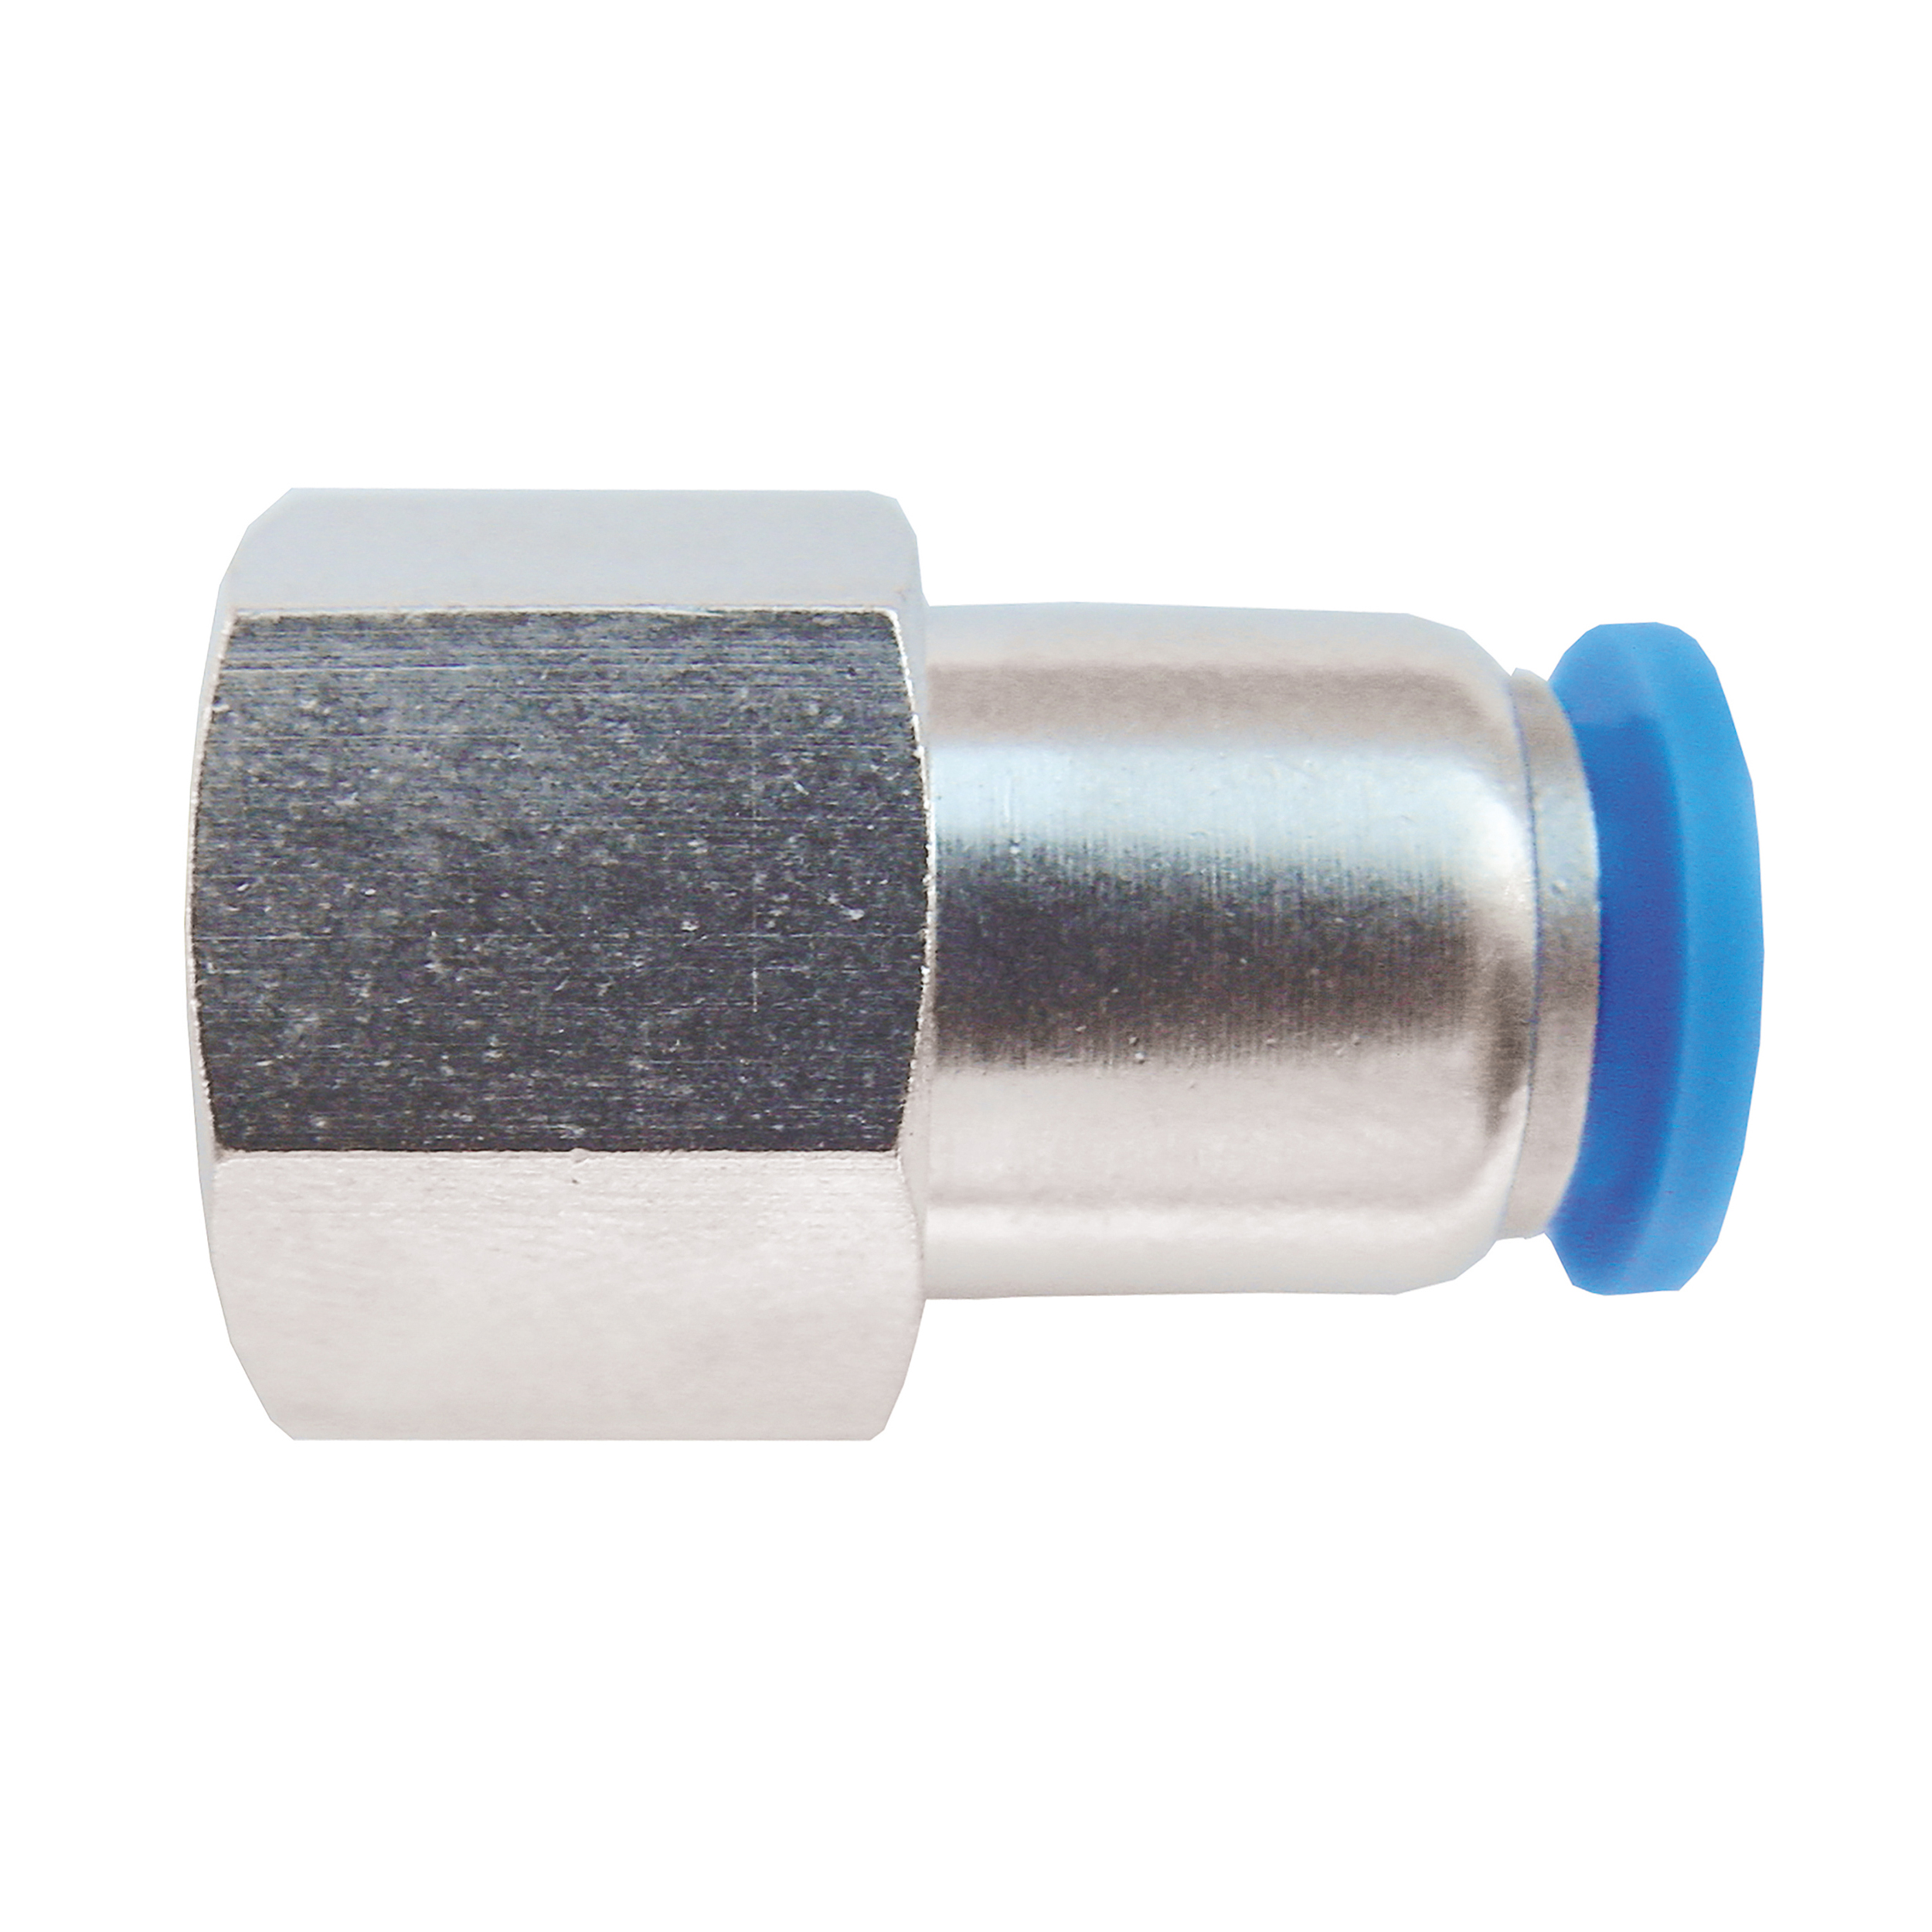 Push-in fitting, G¼ female, tubing-Ø4 mm, B(L): 26 mm, AF 14 mm, max. operating pressure 145 psi, cylindrical thread w. o-ring